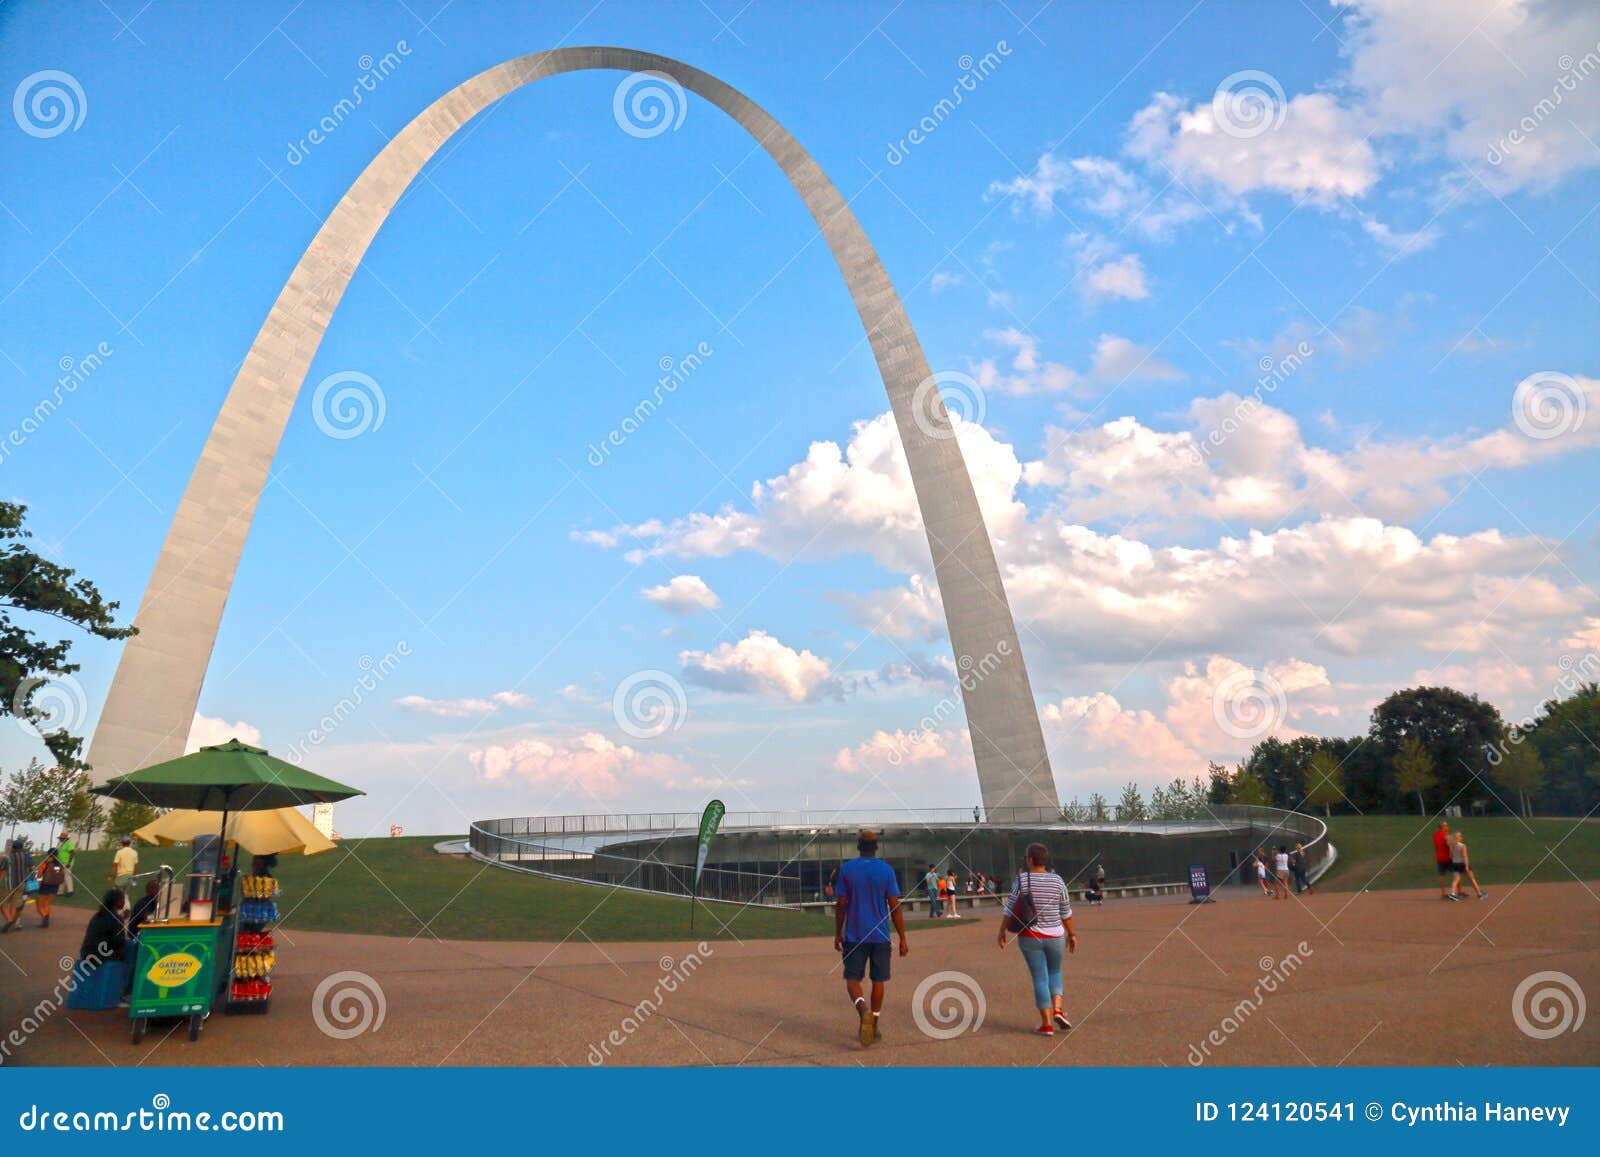 Gateway Arch, St. Louis, MO Editorial Photo - Image of park, saint: 124120541